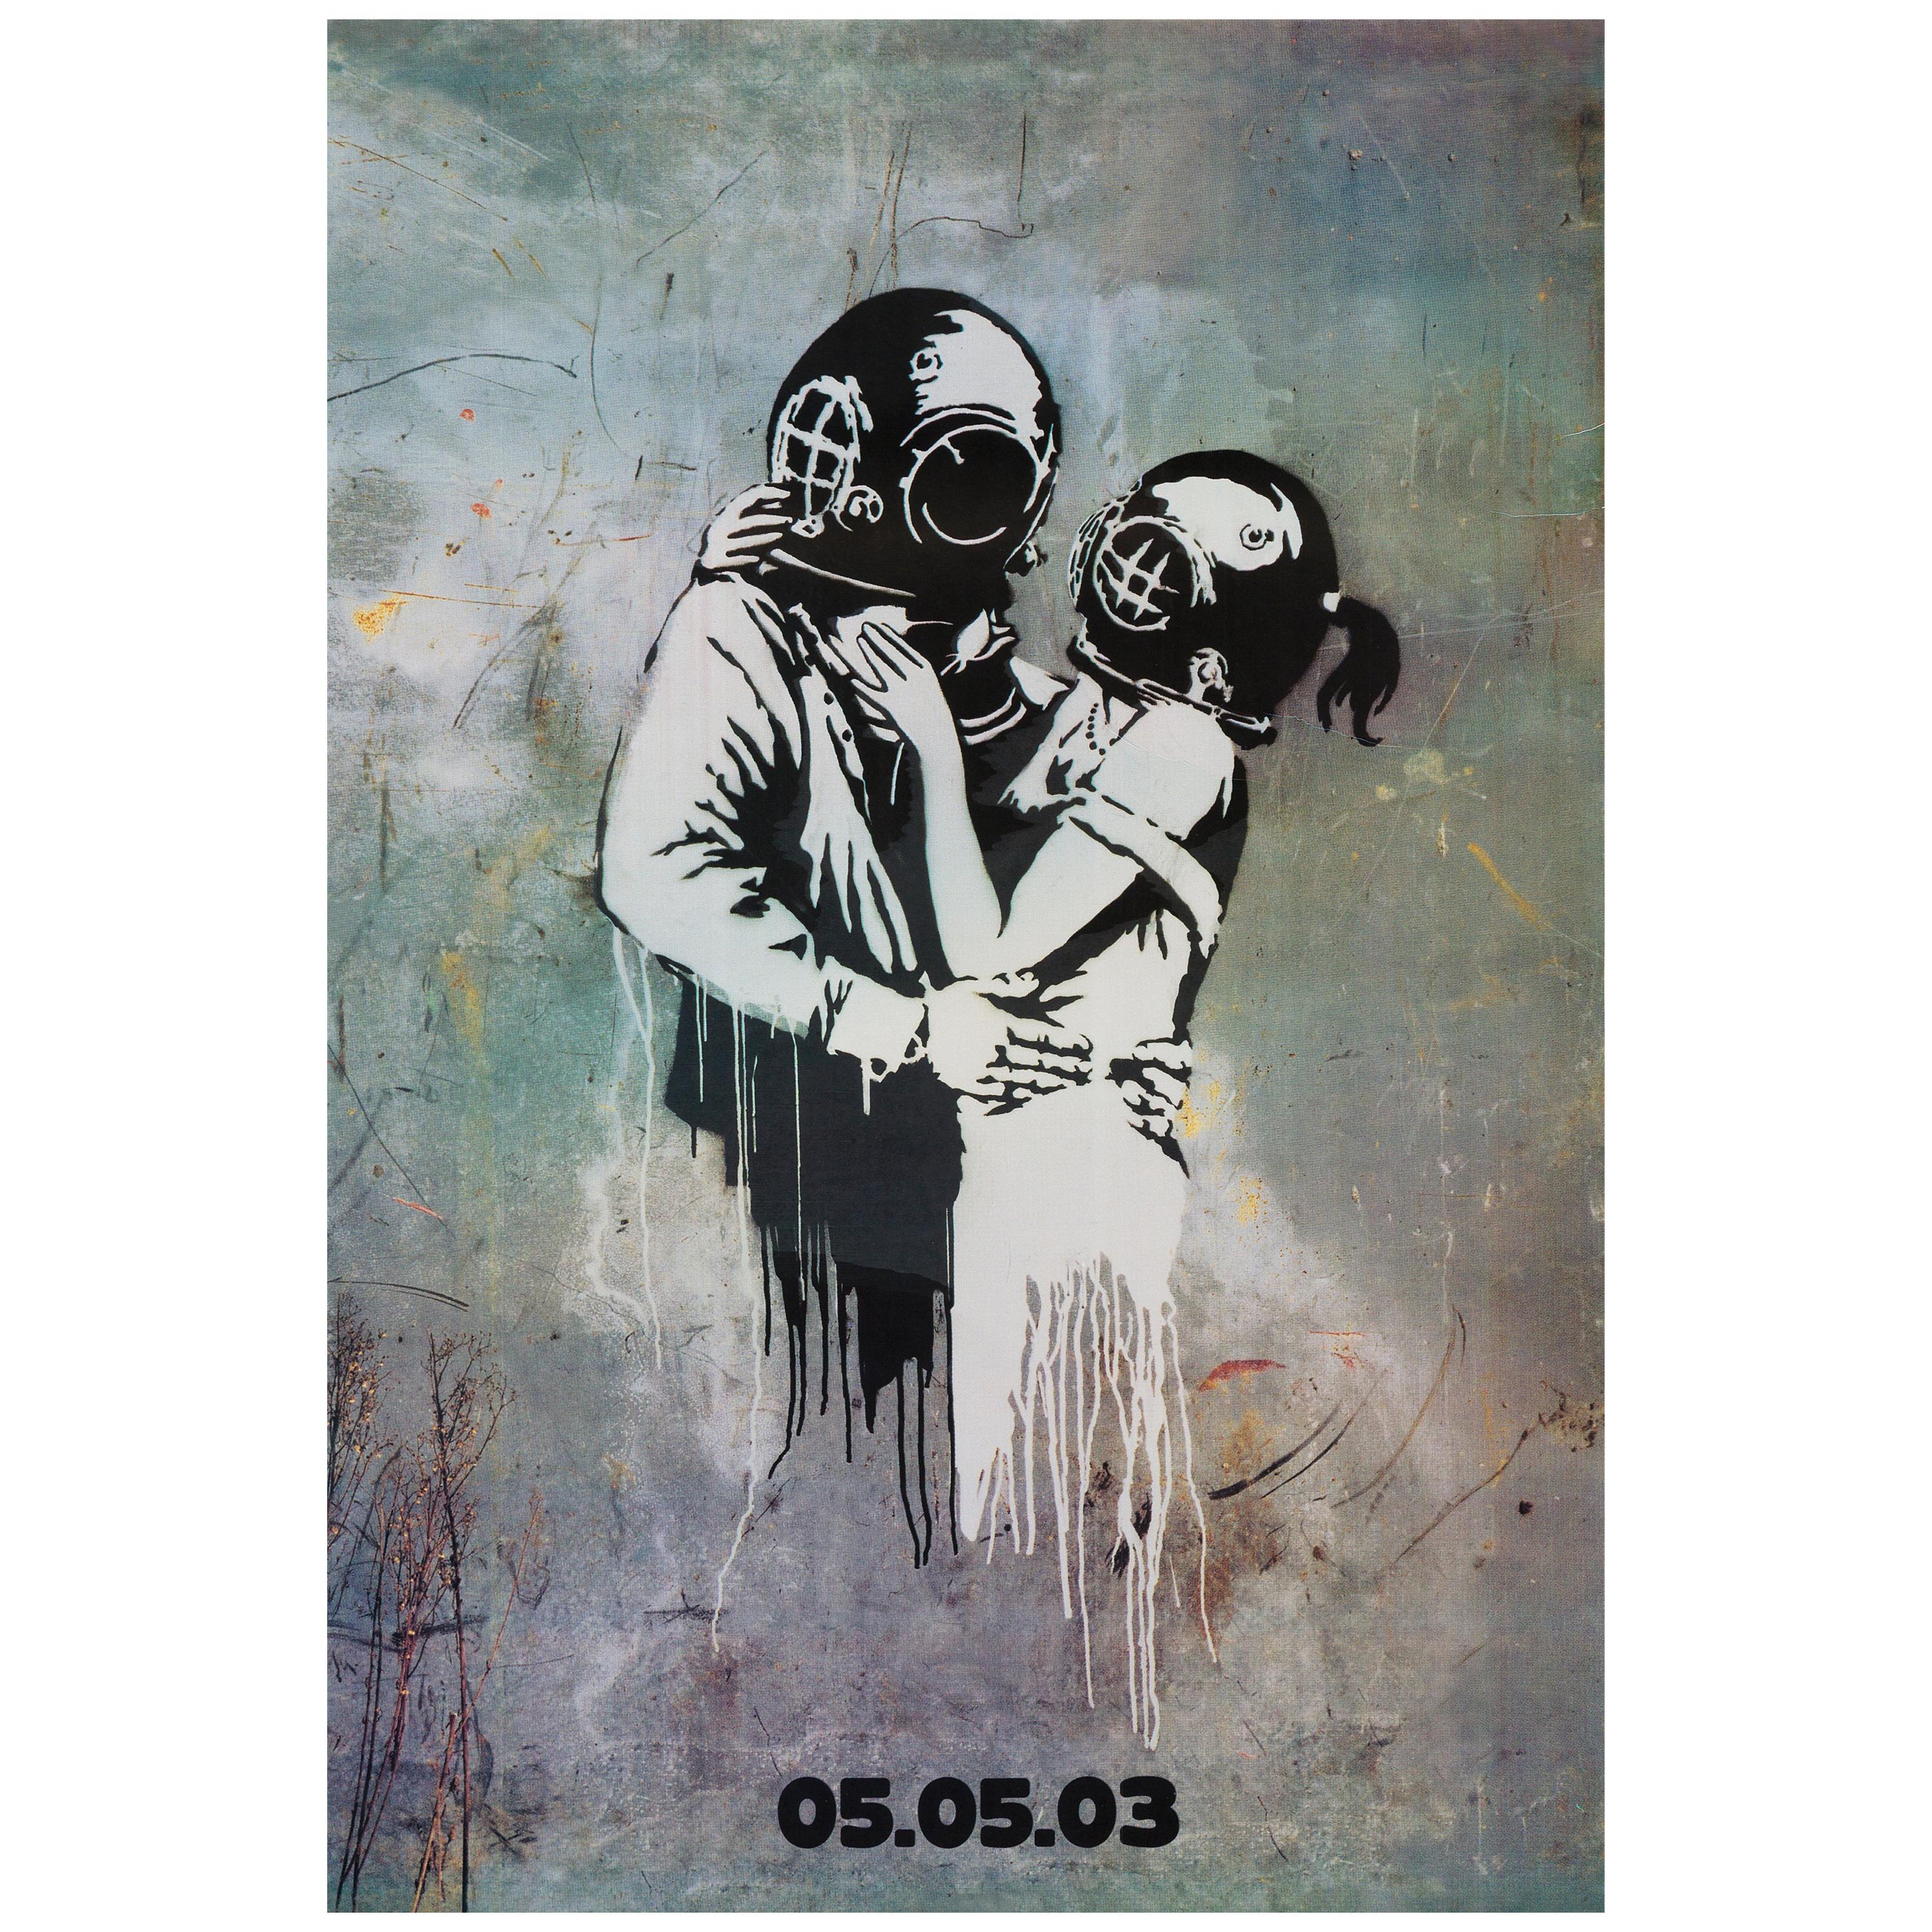 Blur "Think Tank" Original Promotional Poster by Banksy, British, 2003